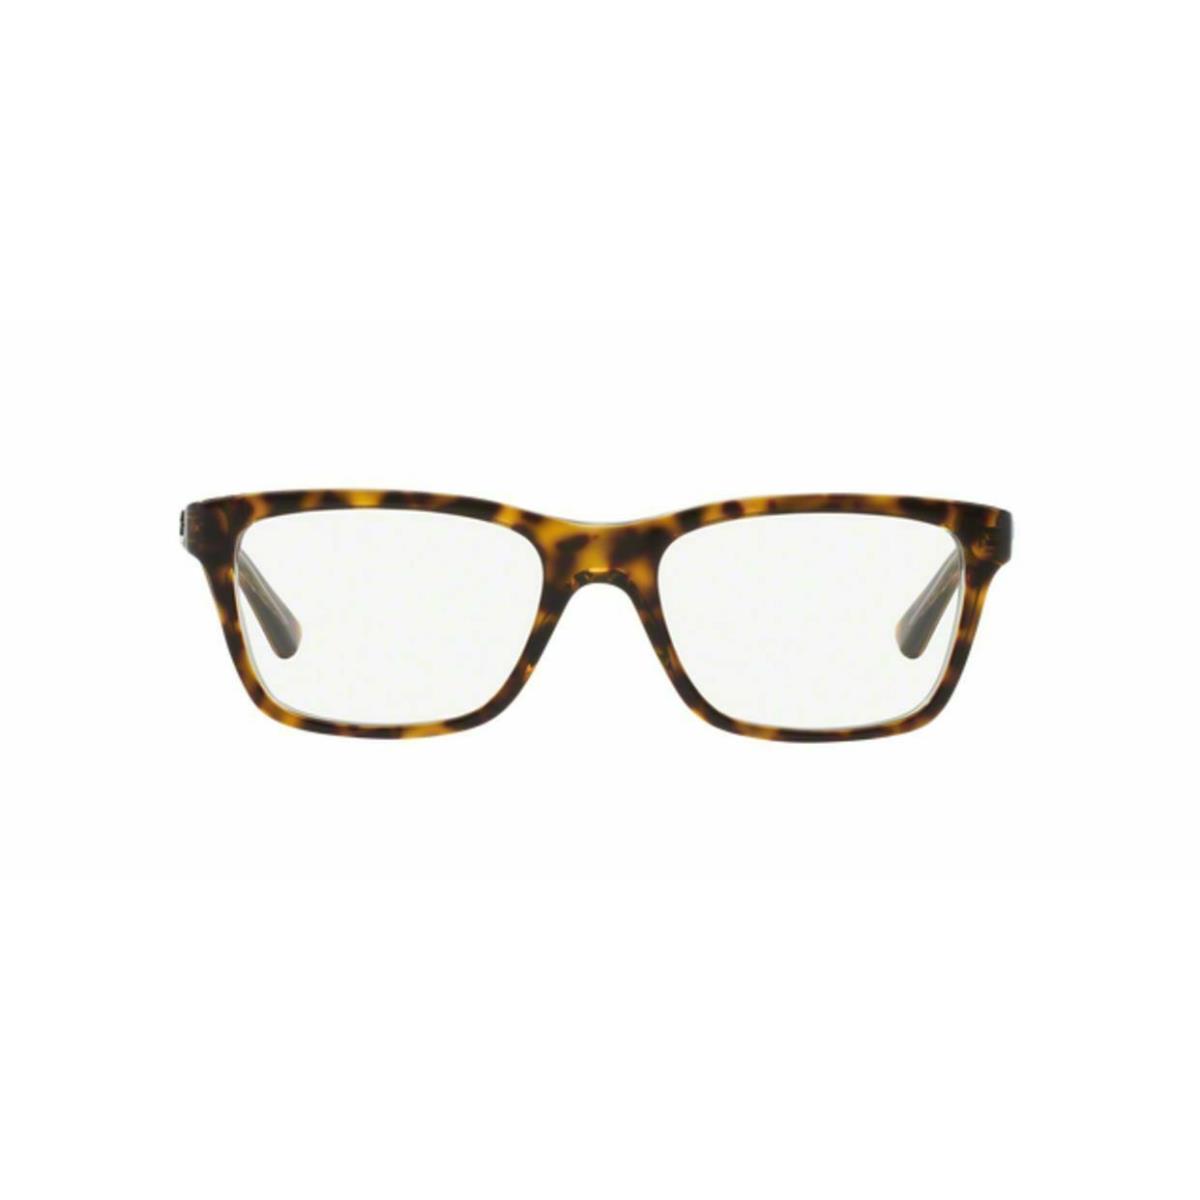 Ray-Ban eyeglasses  - Tortoise Frame 1